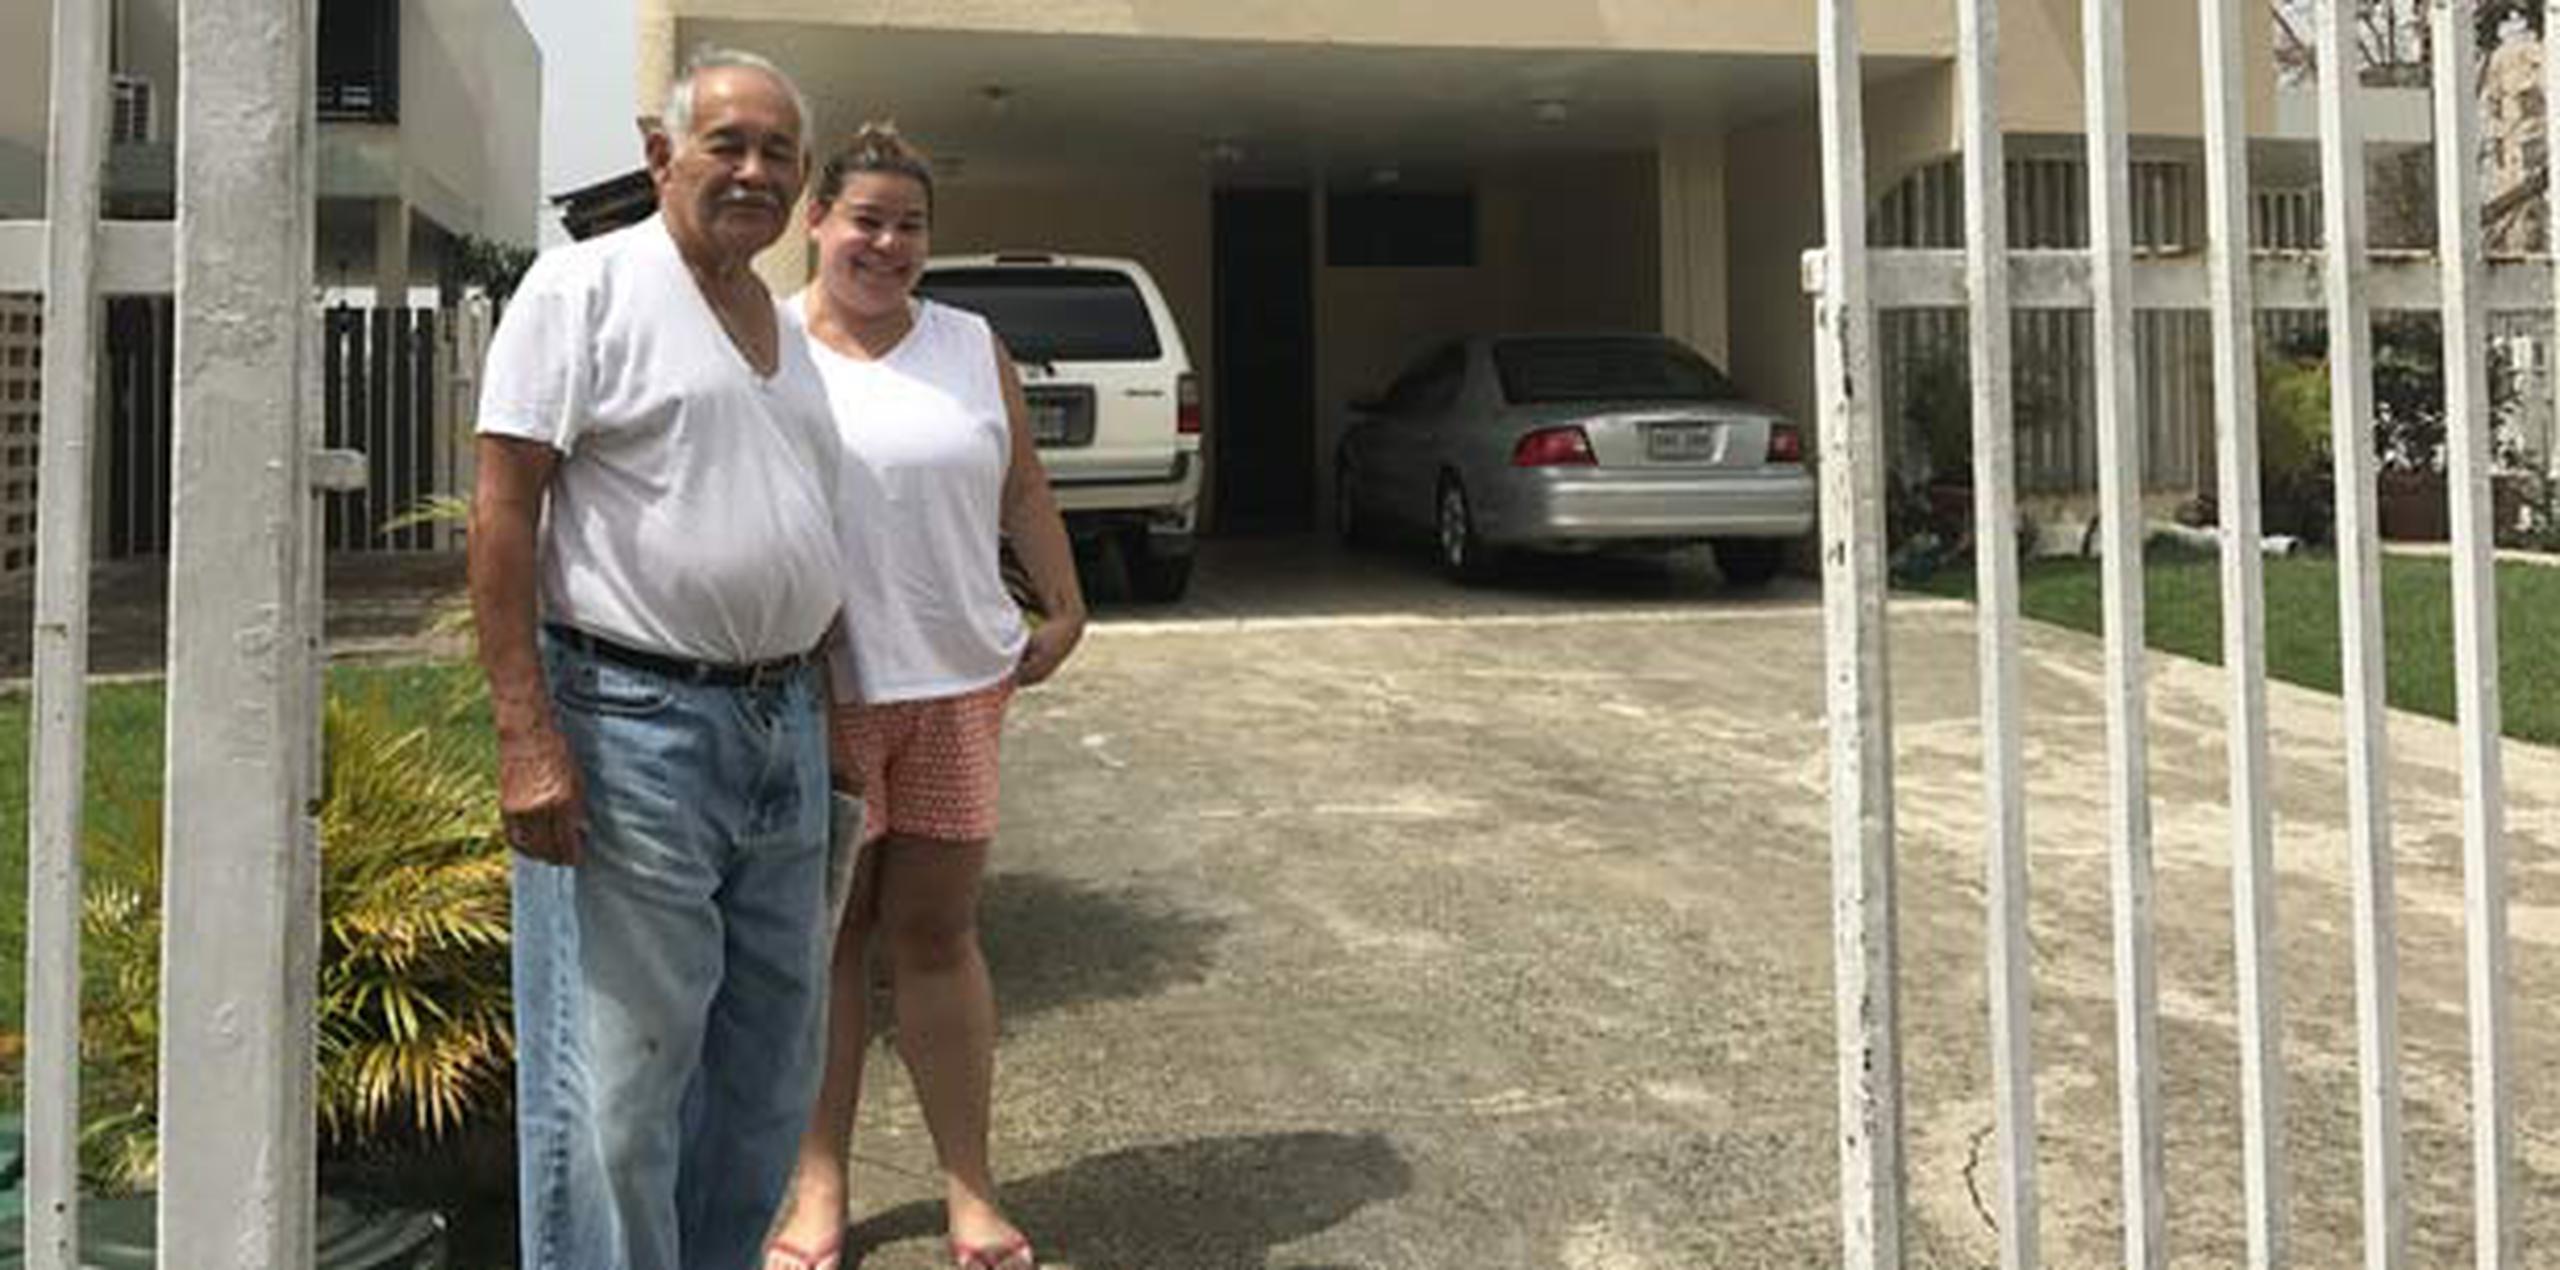 José Antonio Pacheco junto a su hija Leslieann Pacheco, residentes de las Mansiones de Alejandrina en Guaynabo. (nemesis.mora@gfremdia.com)